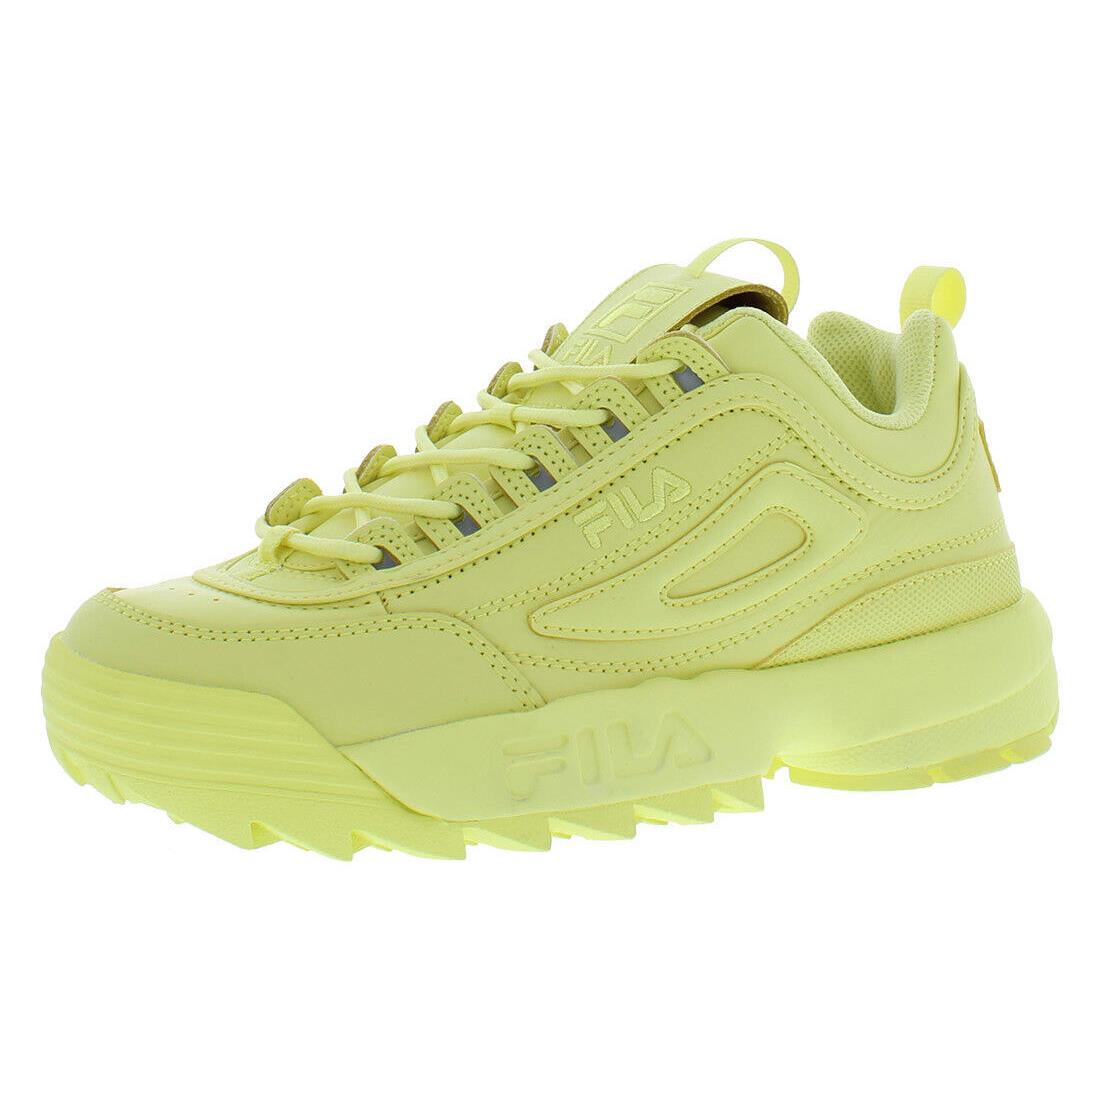 Fila Disruptor II Premium Womens Shoes - Tender Yellow/Tender Yellow/Tender Yellow, Main: Yellow